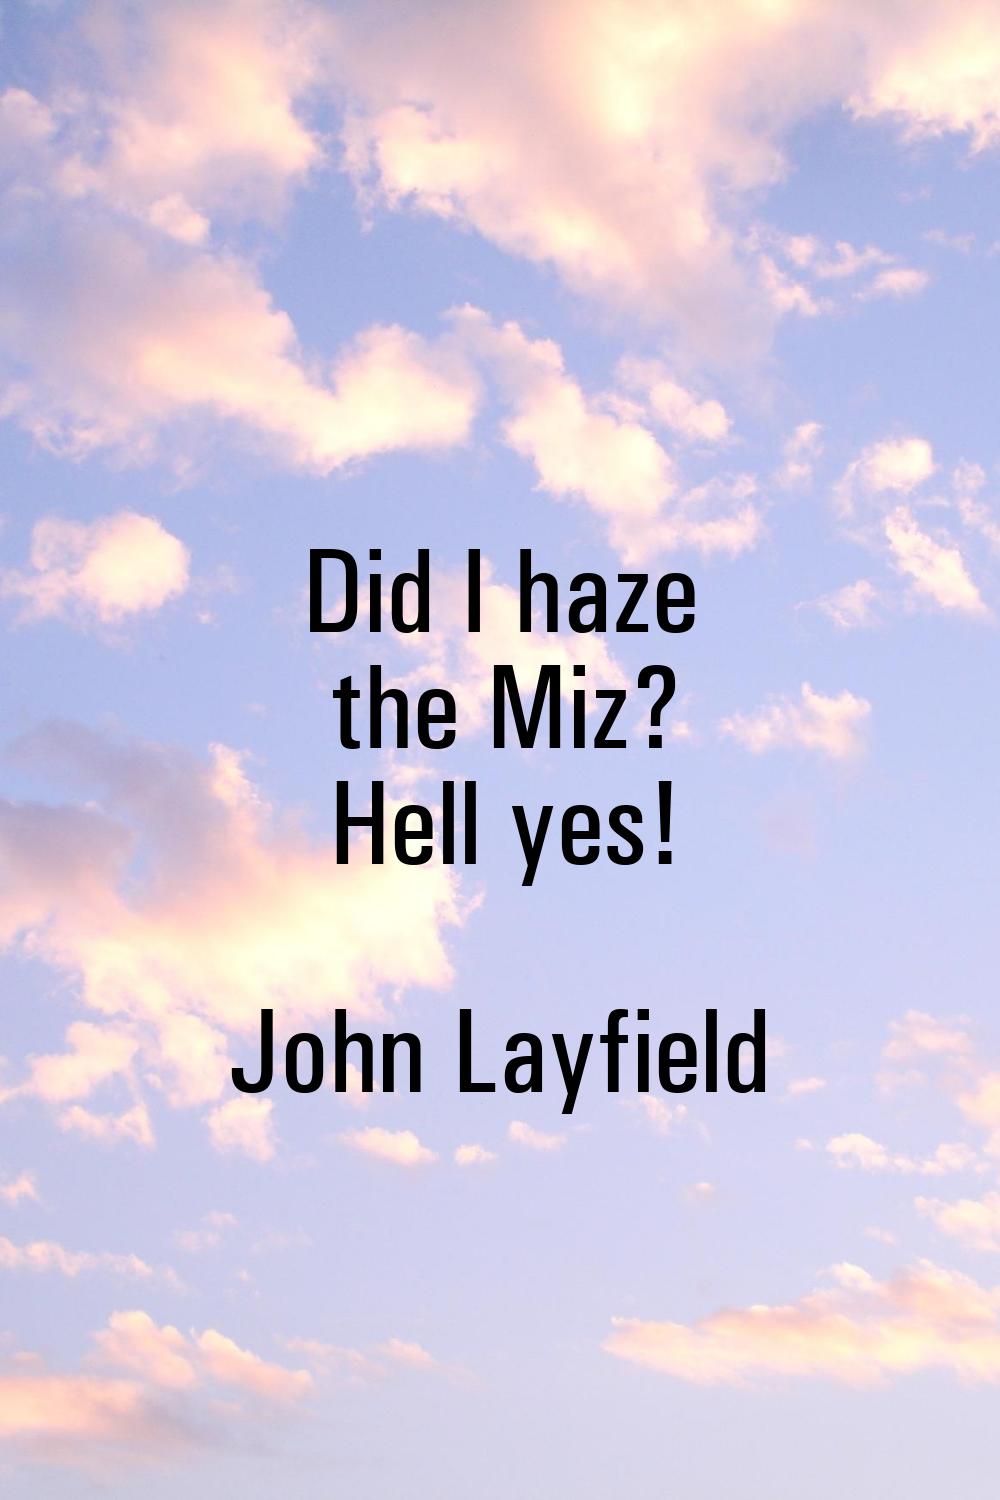 Did I haze the Miz? Hell yes!